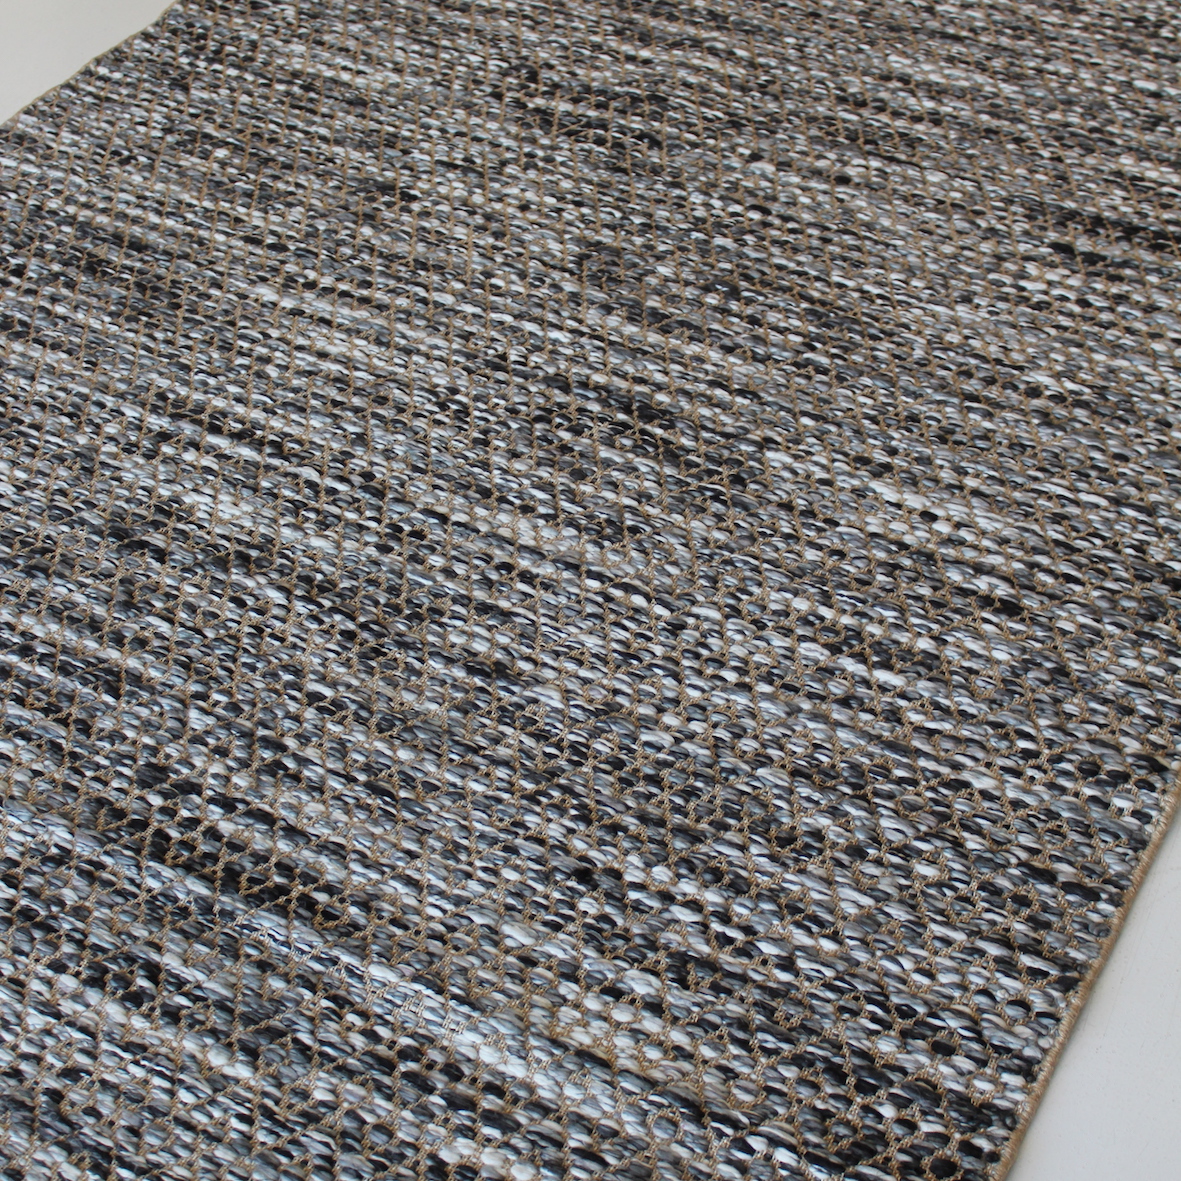 Charcoal texture rug